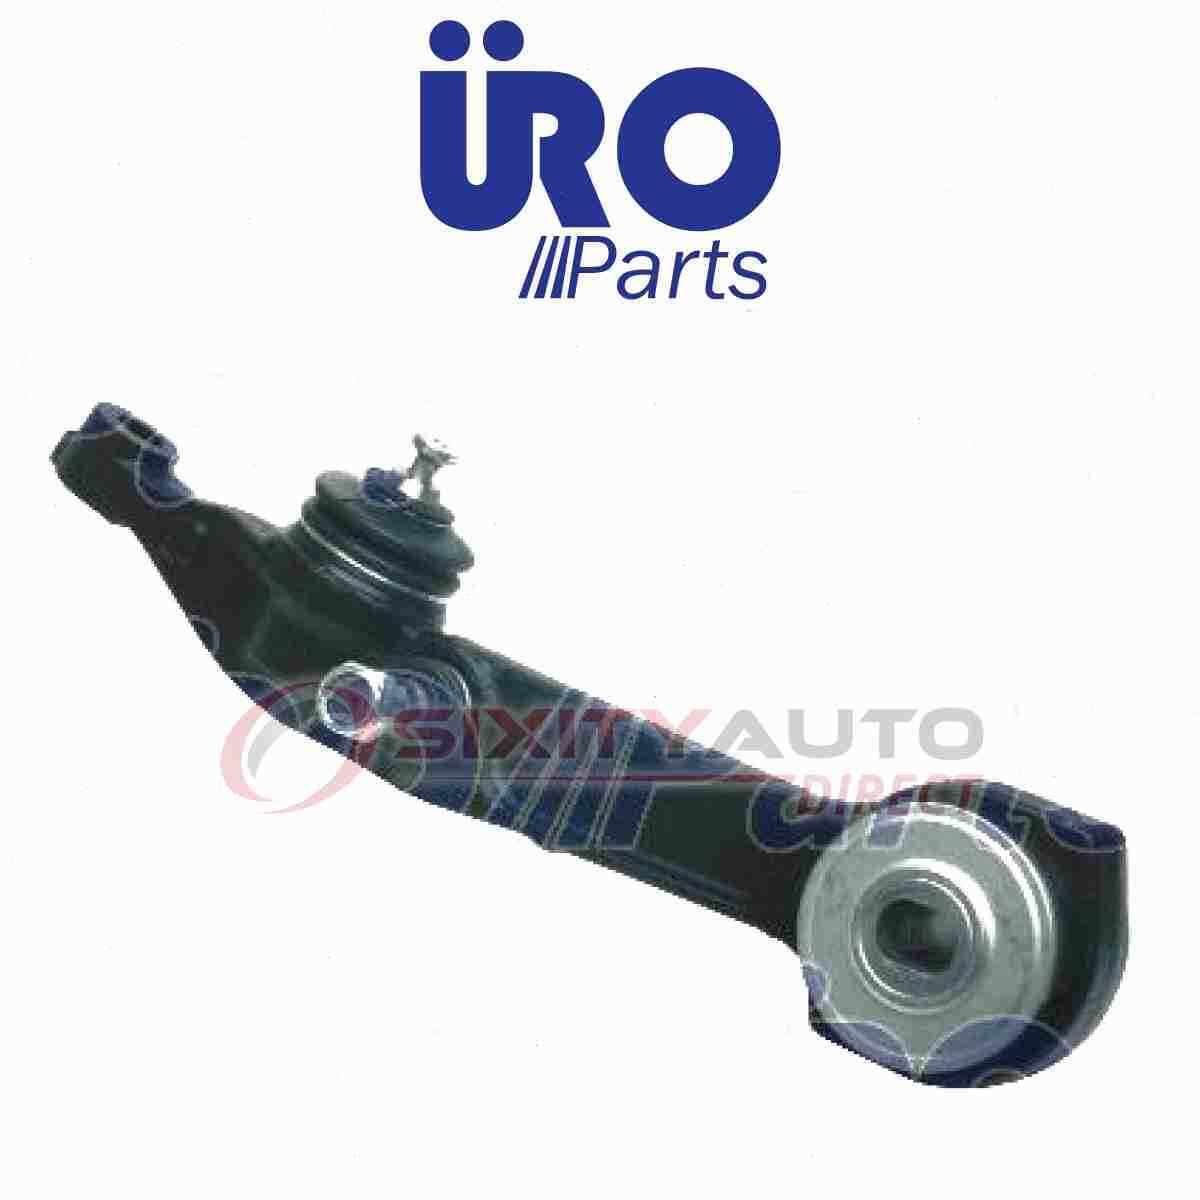 URO 2203309007 Suspension Control Arm for V30-7356 URO-001892 520-980 ys